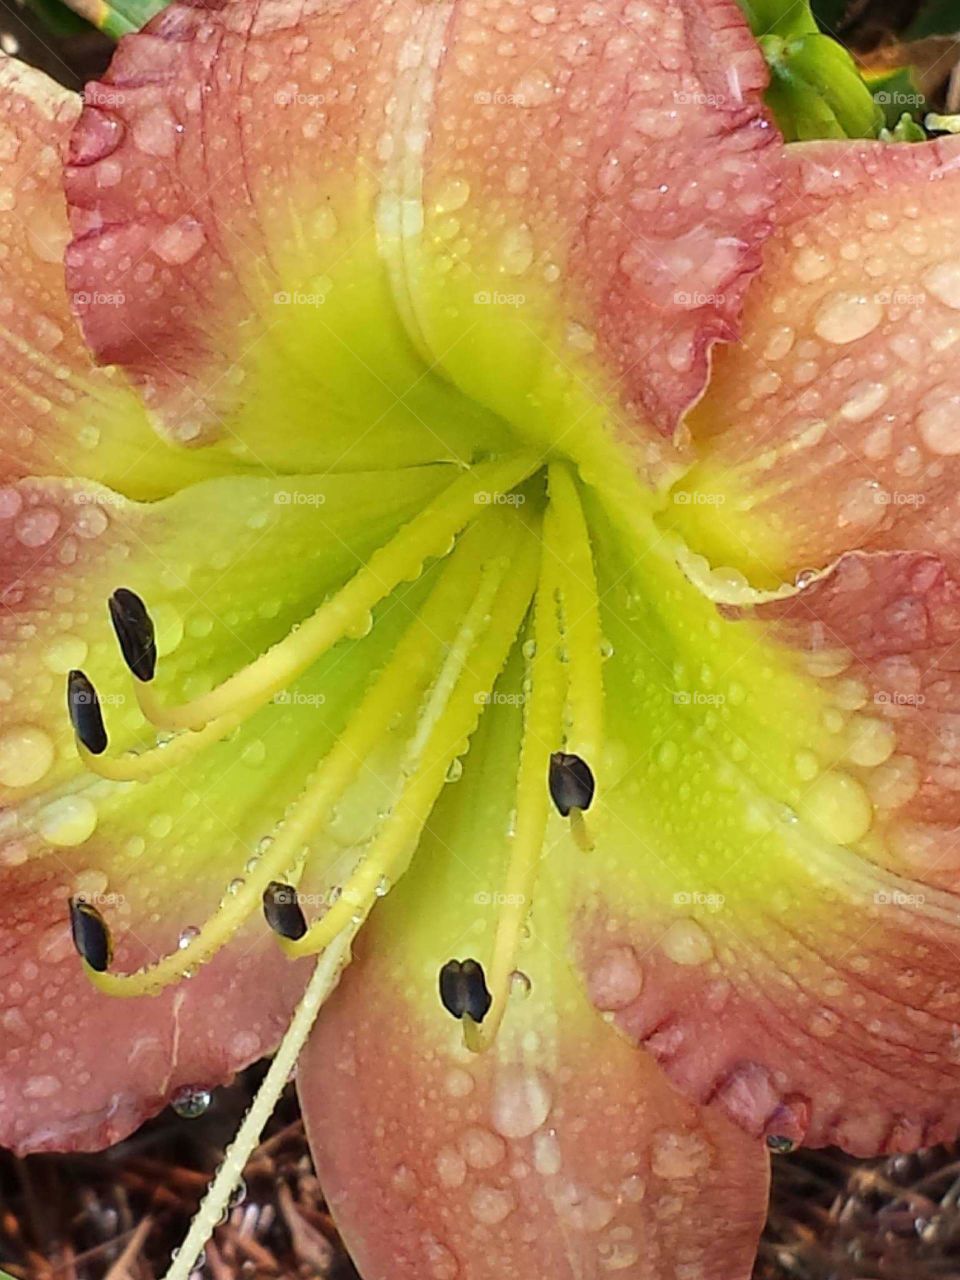 yellow flower after rain